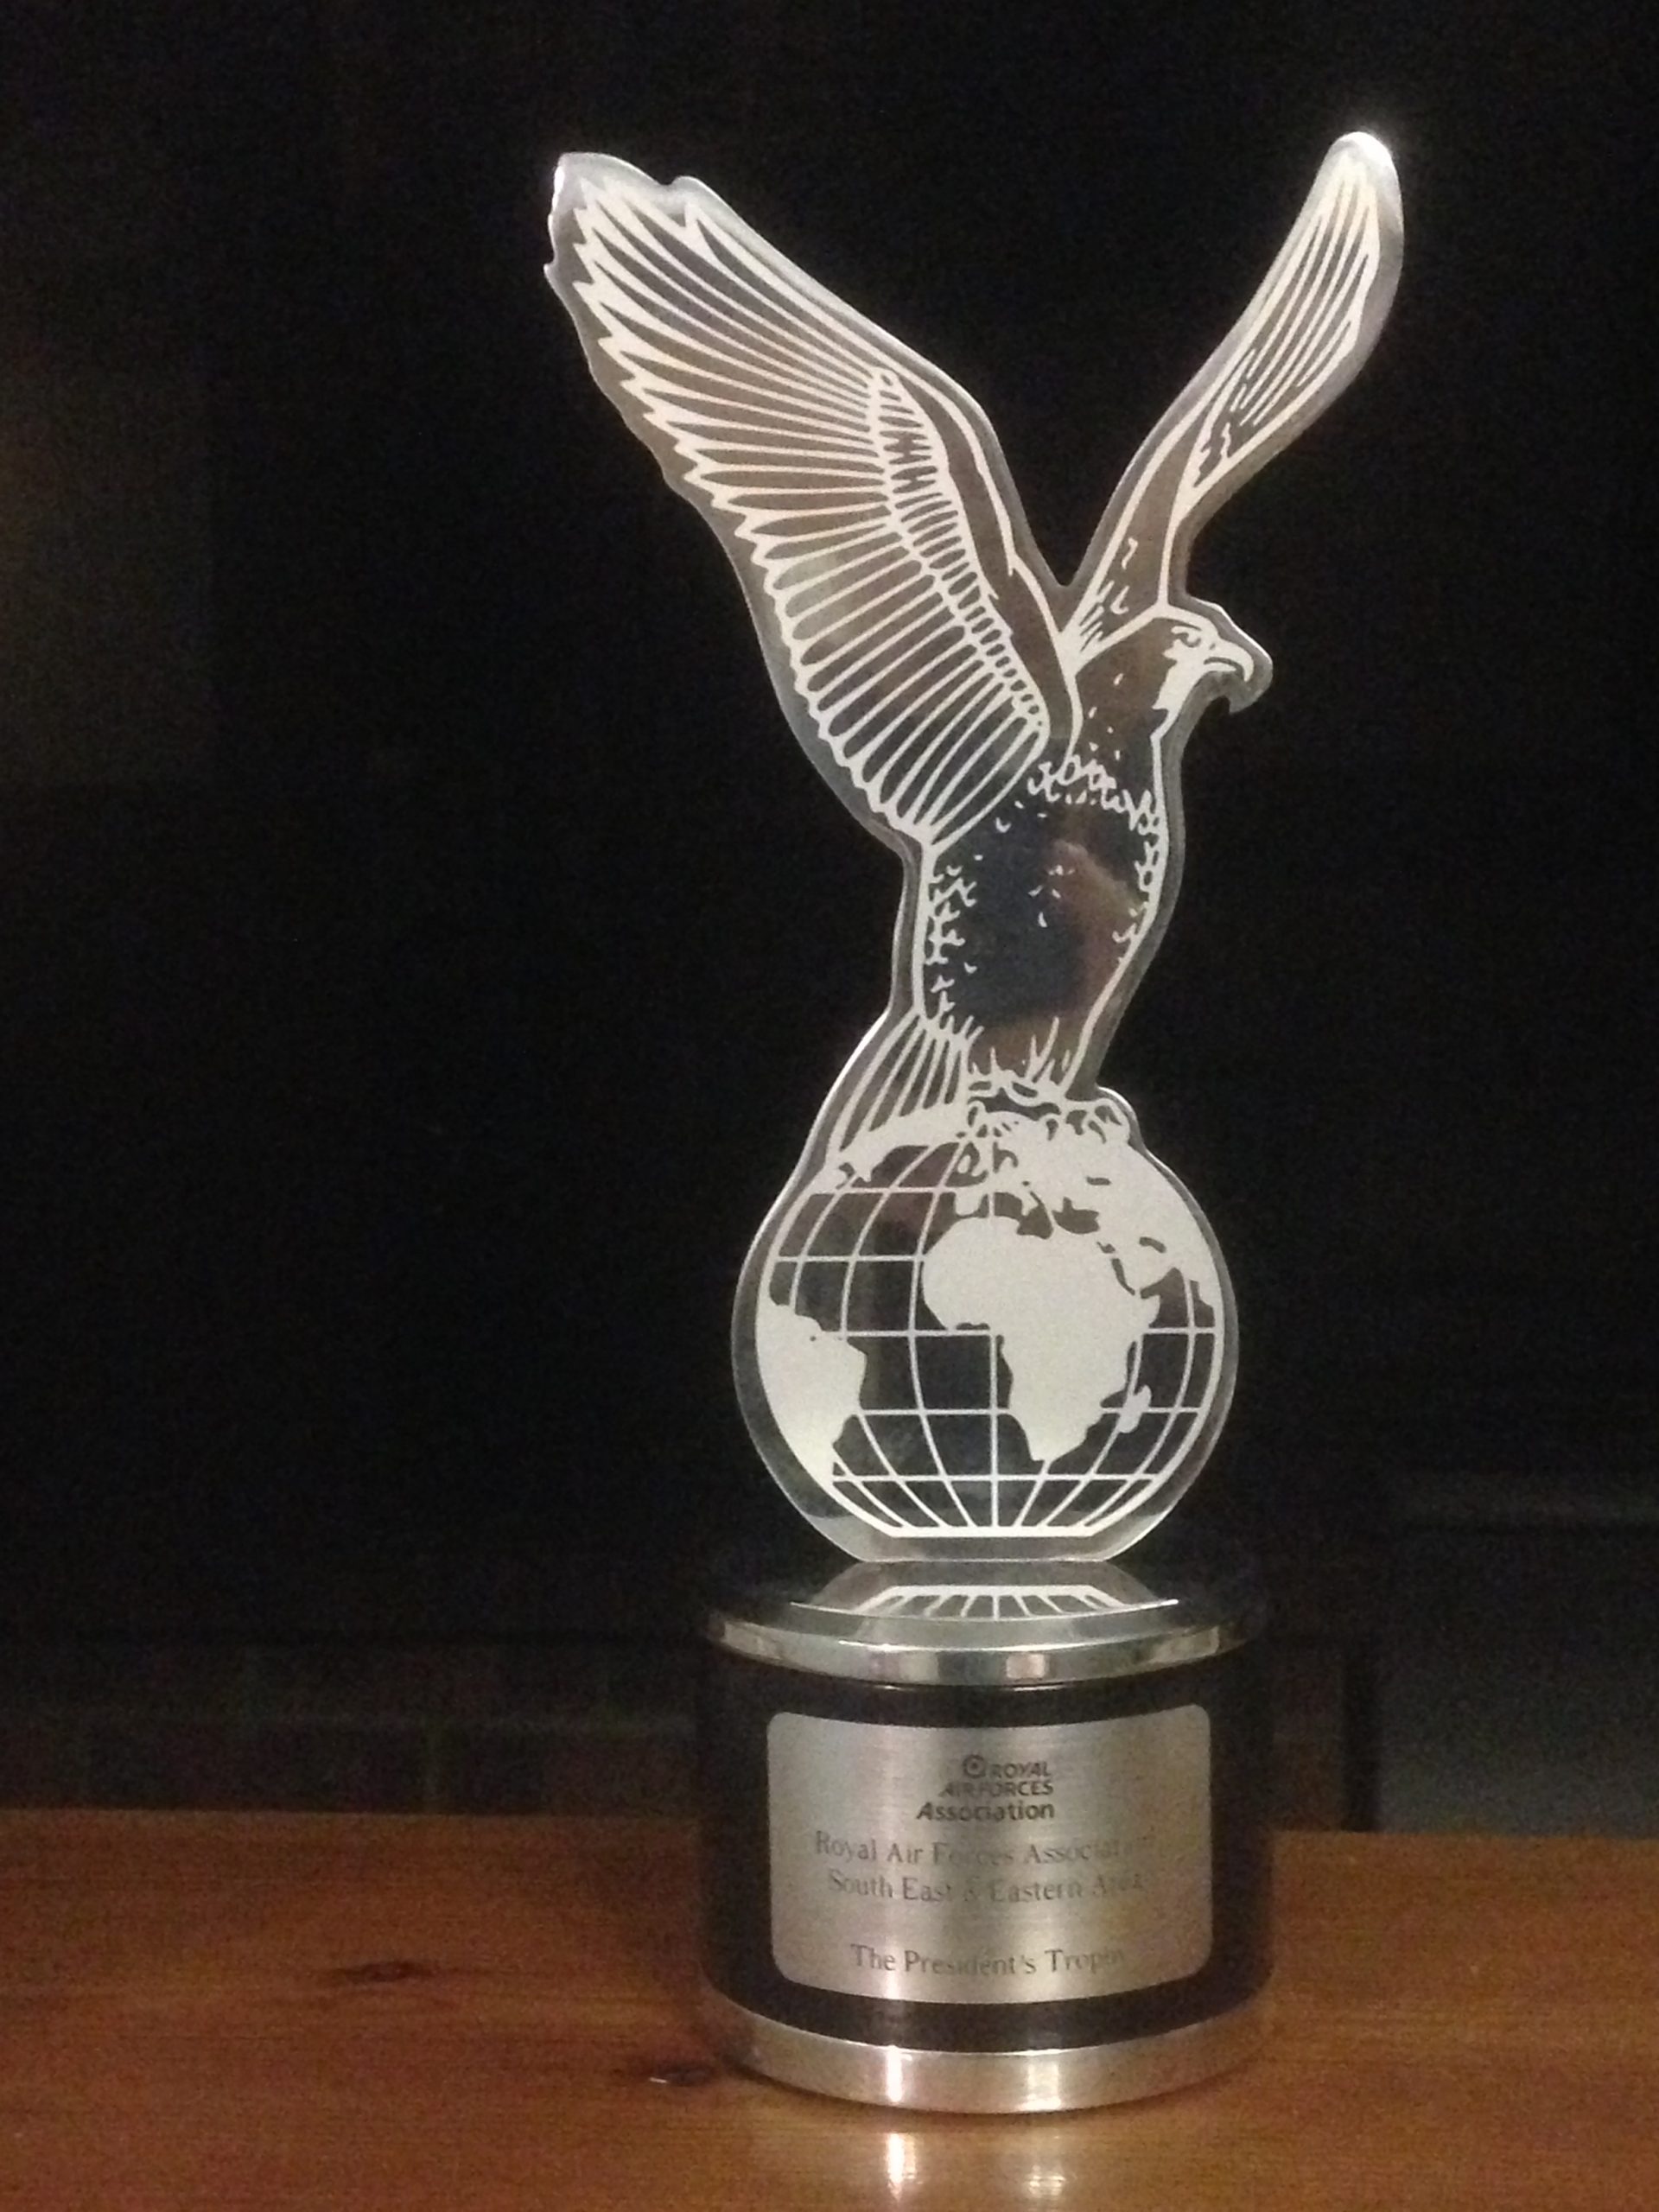 South East and East Area President's Trophy. RAF Association Eagle on World Emblem